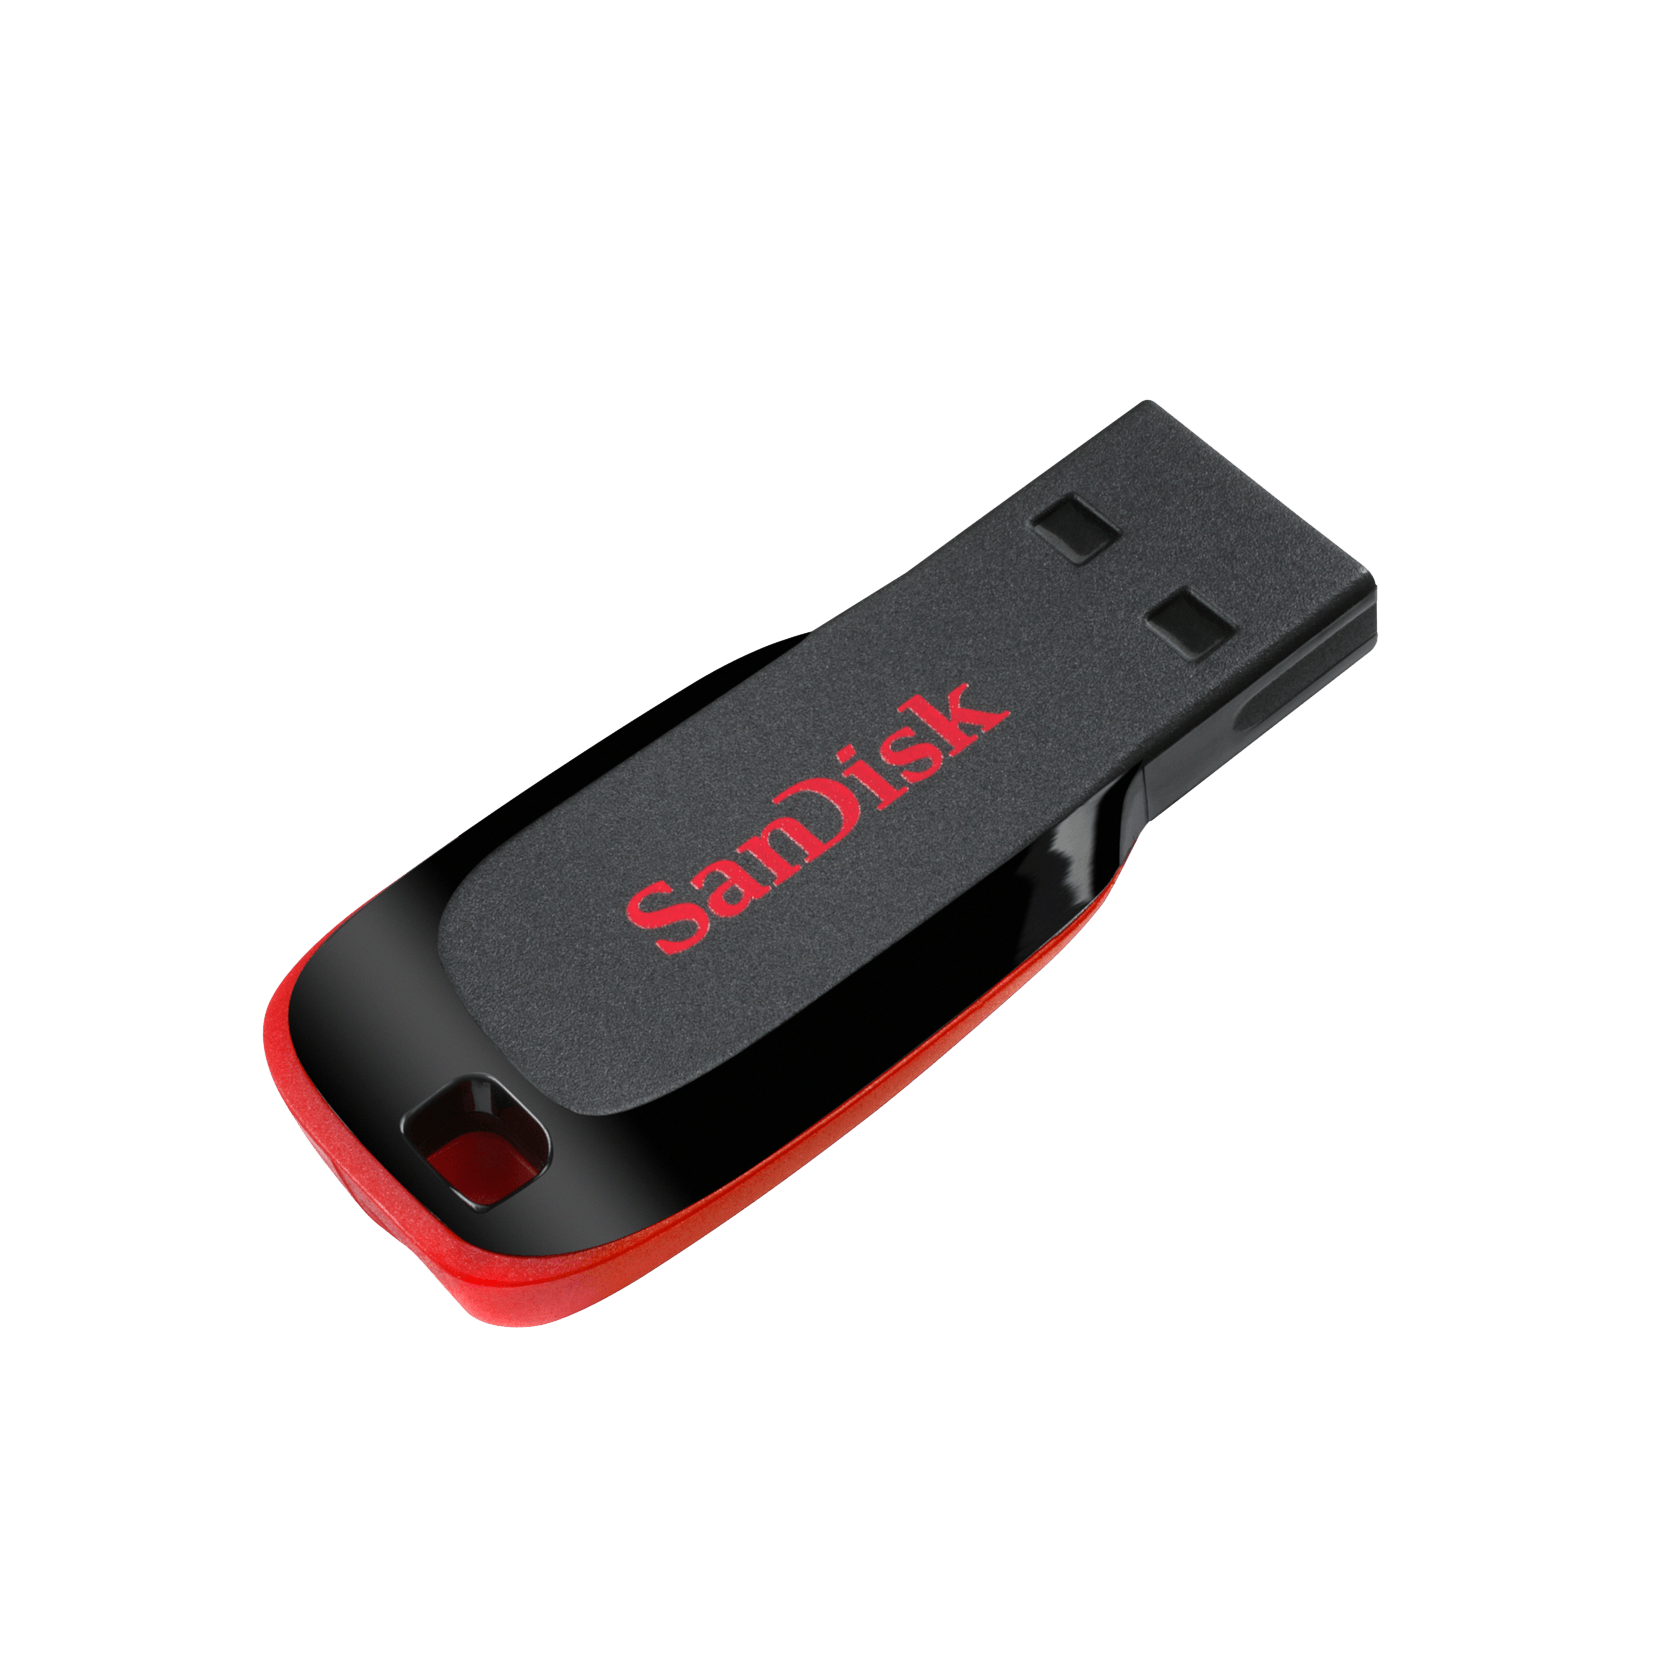 Sandisk Cruzer Blade 64Gb USB 2.0 隨身碟 (黑色)